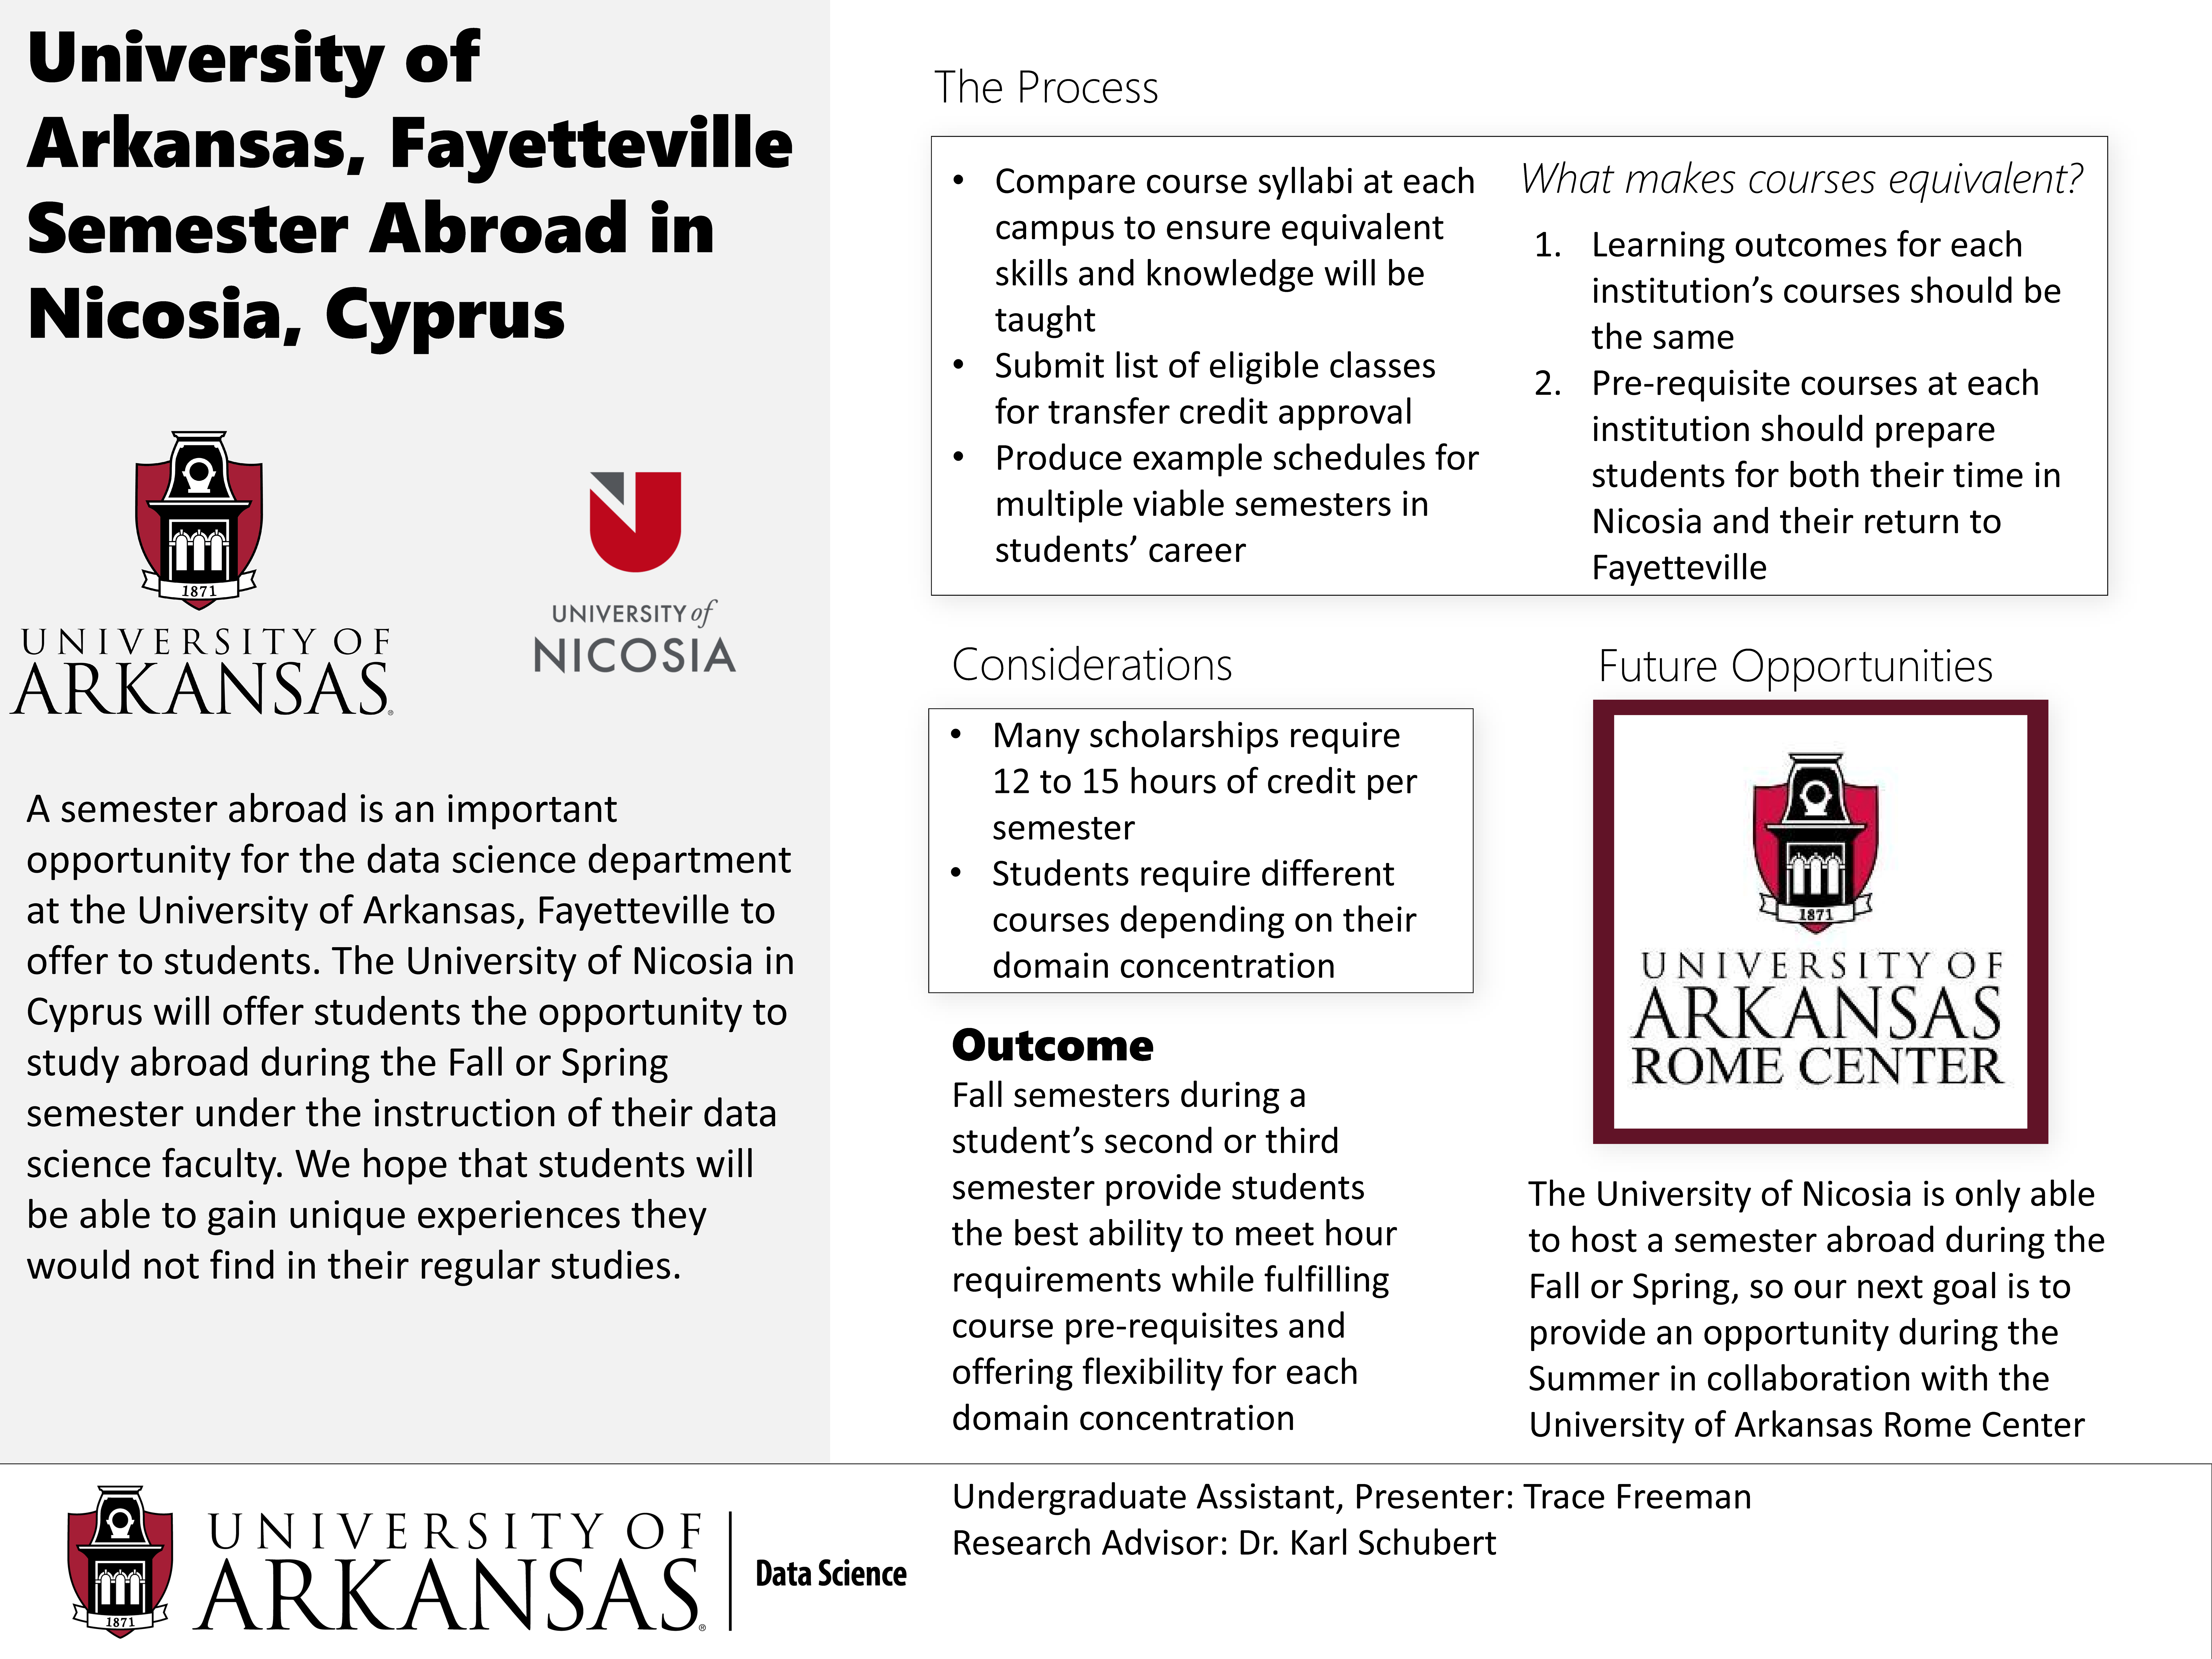 University of Arkansas, Fayetteville Semester Abroad in Nicosia, Cyprus